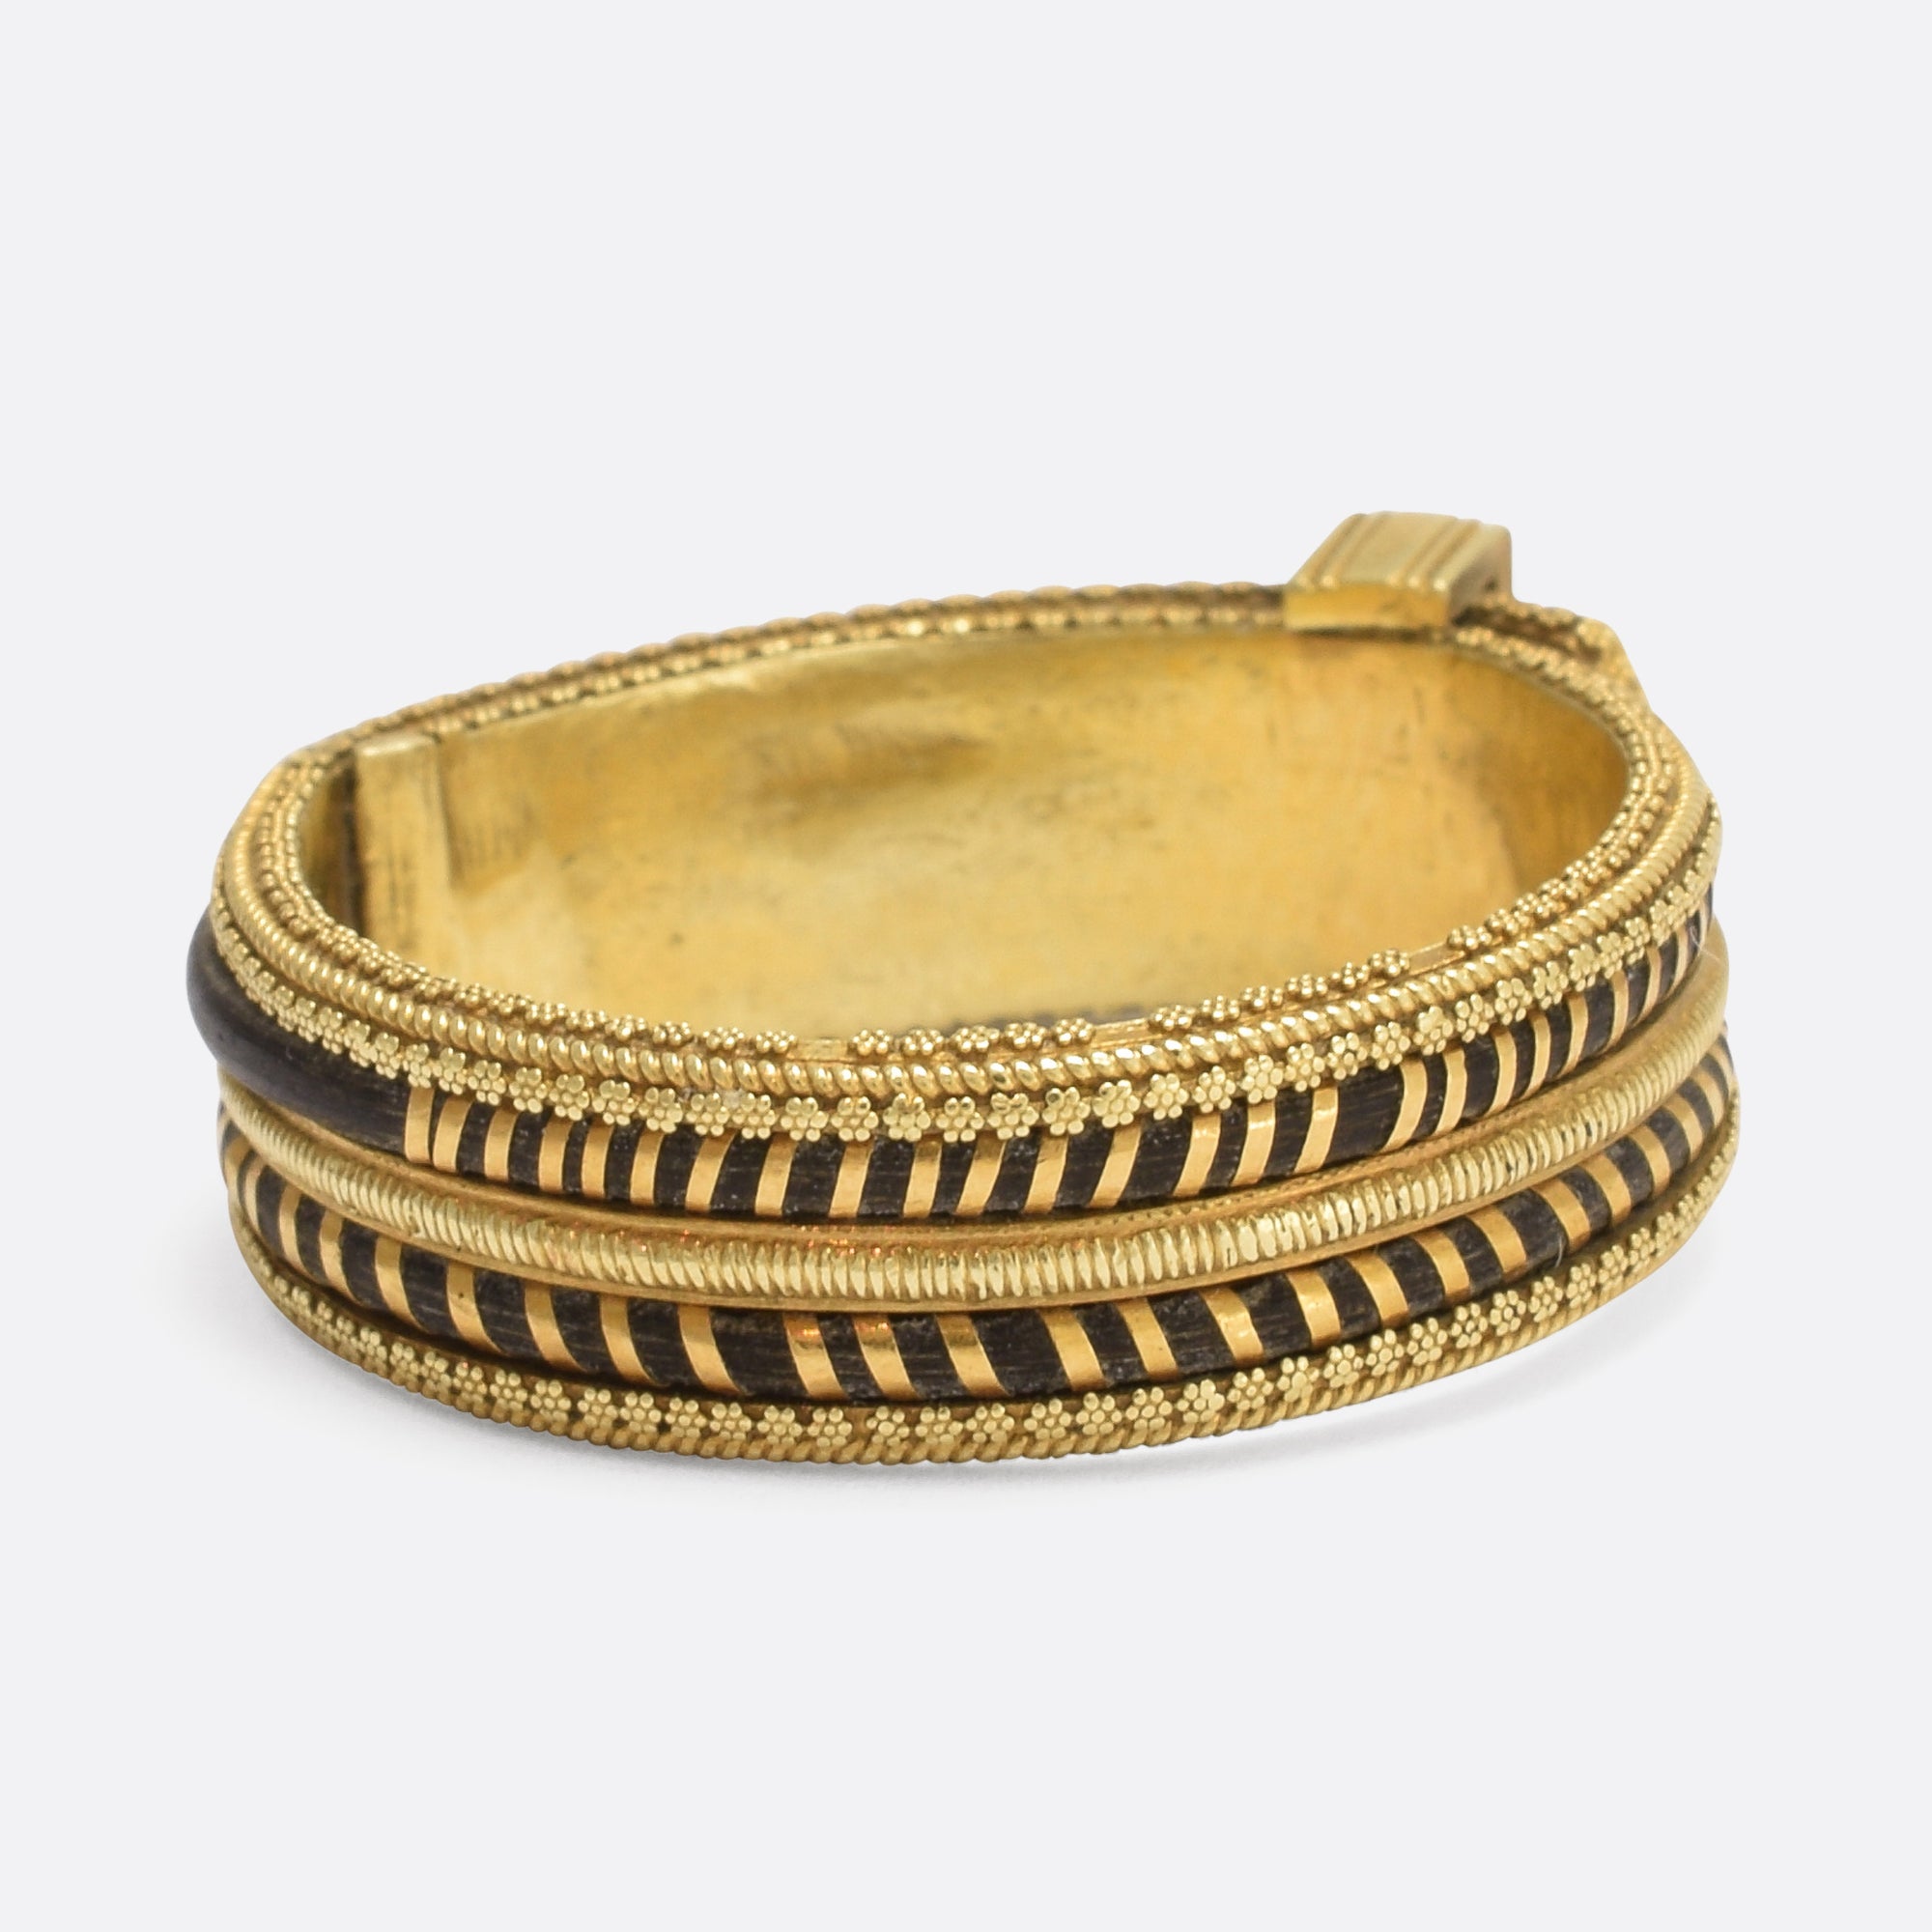 Gold and Elephant Hair Love Bracelet c1940 - Kimberly Klosterman Jewelry